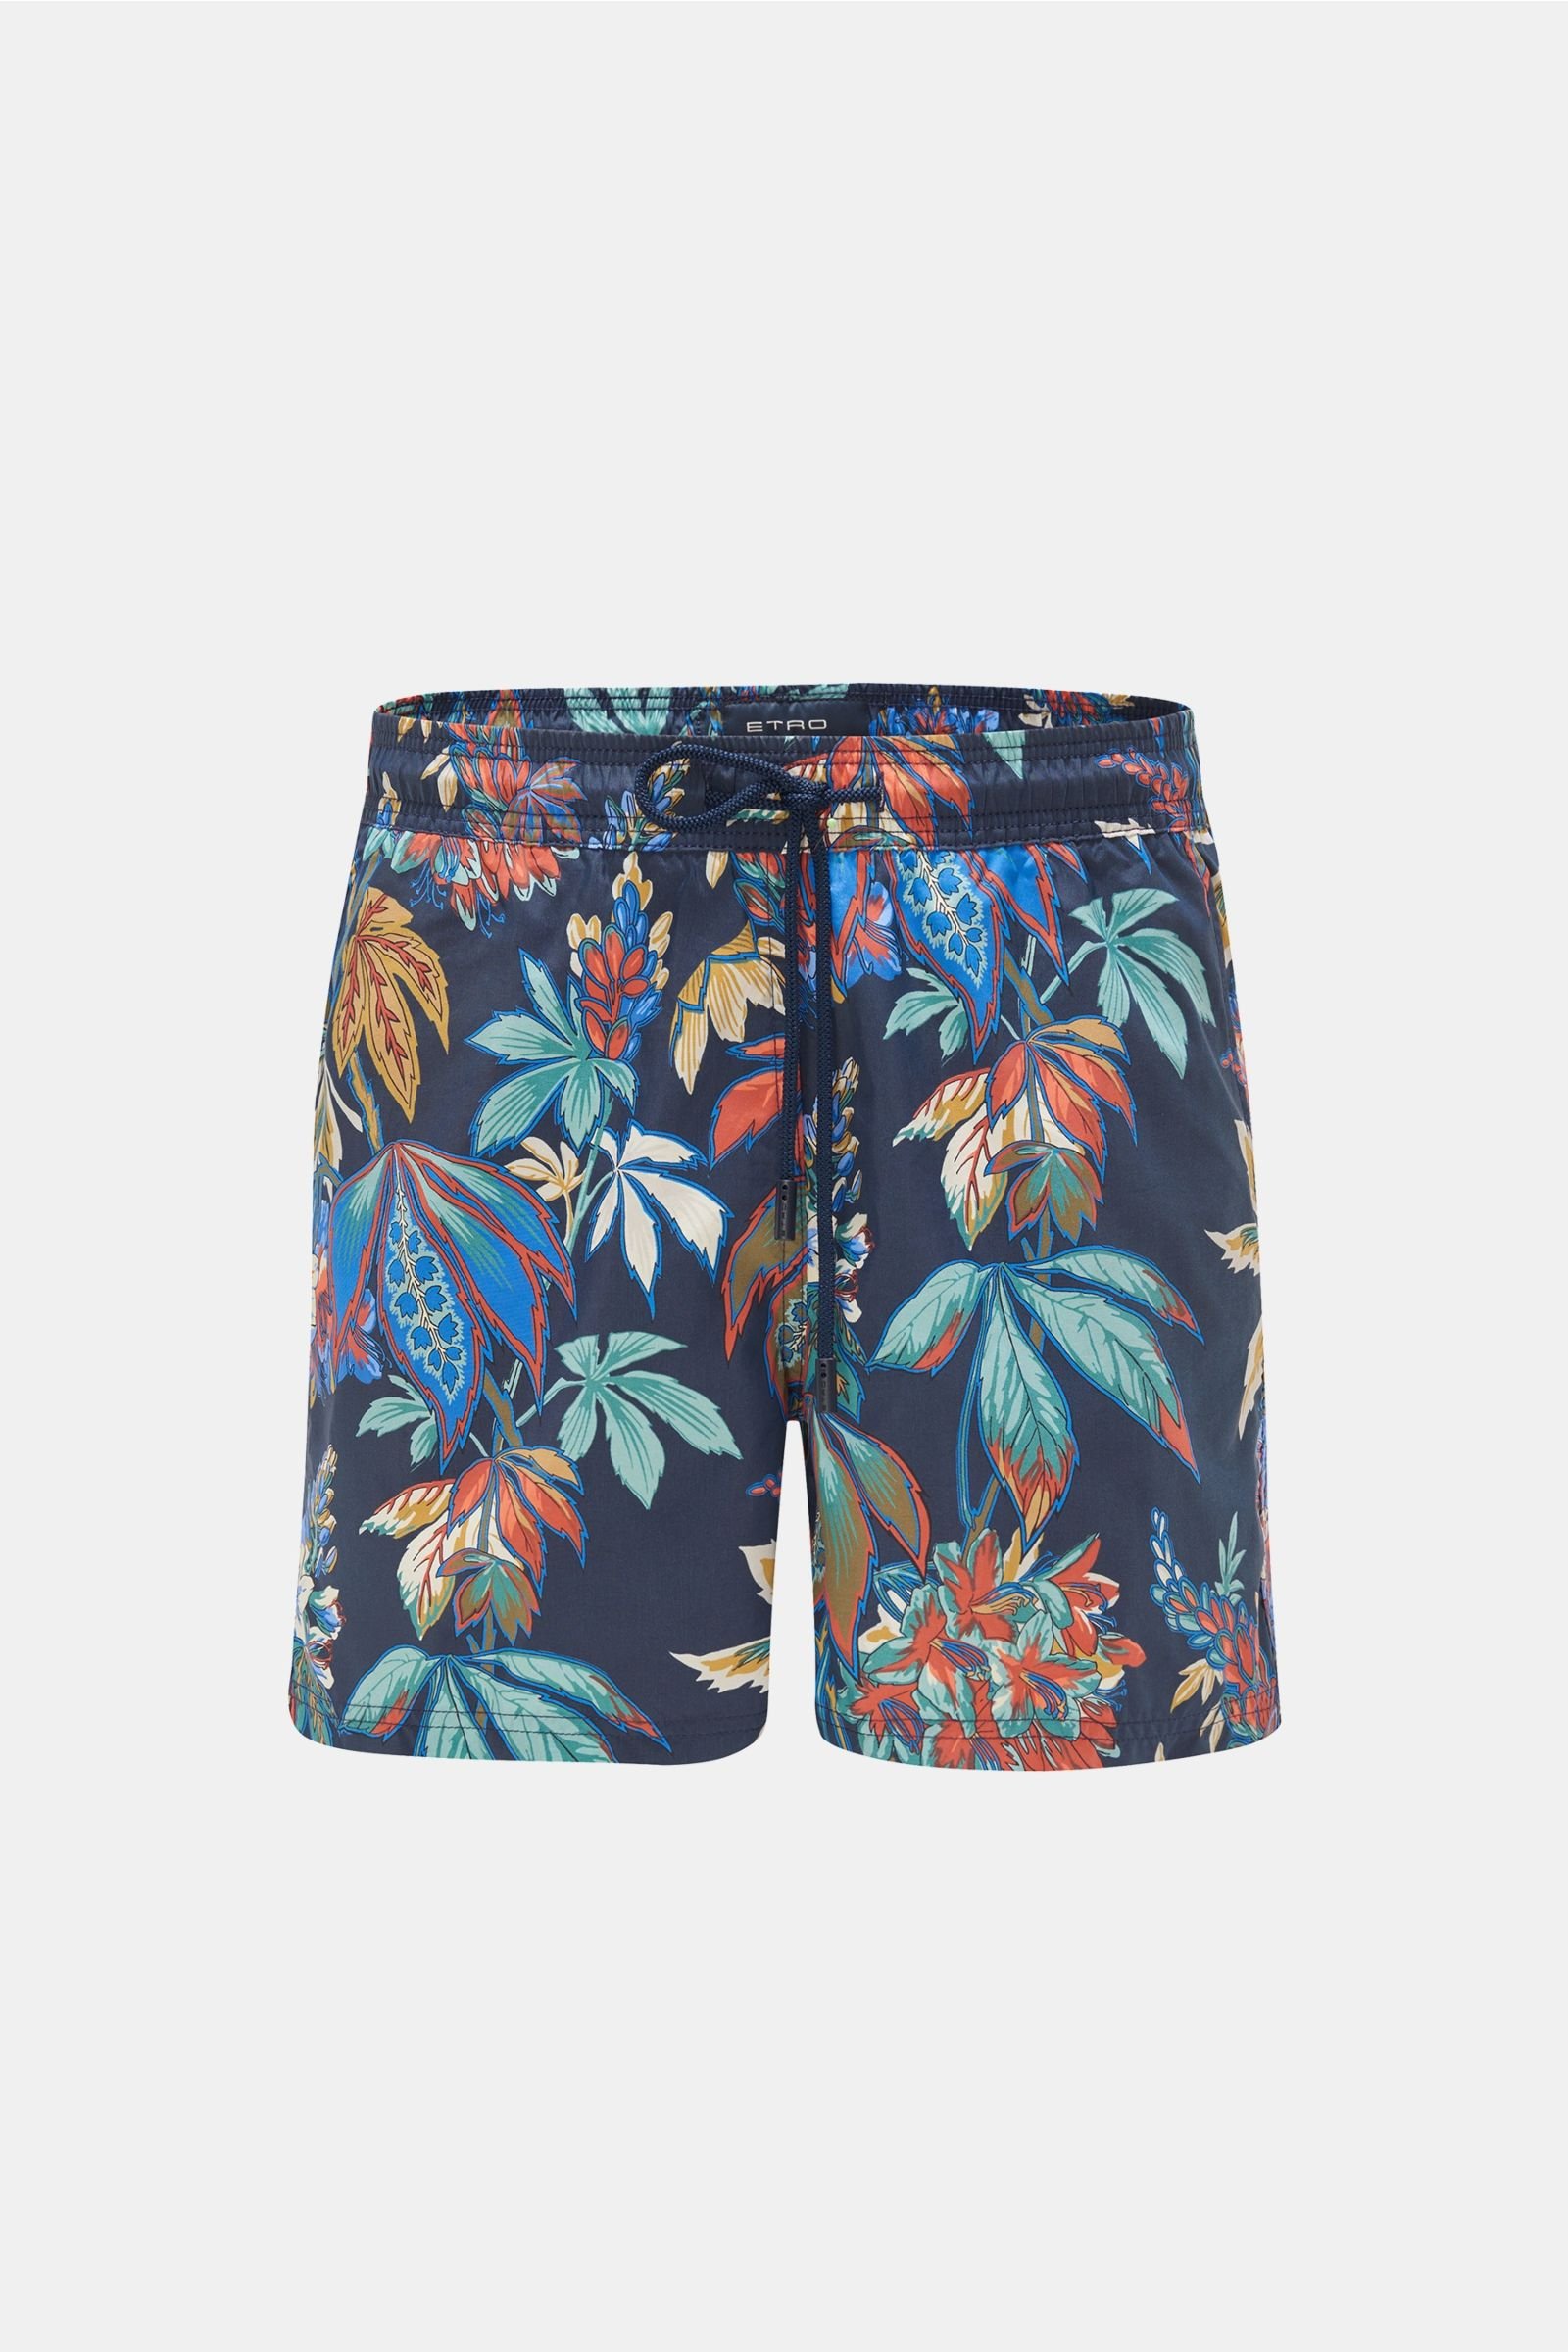 Swim shorts navy/mint green patterned